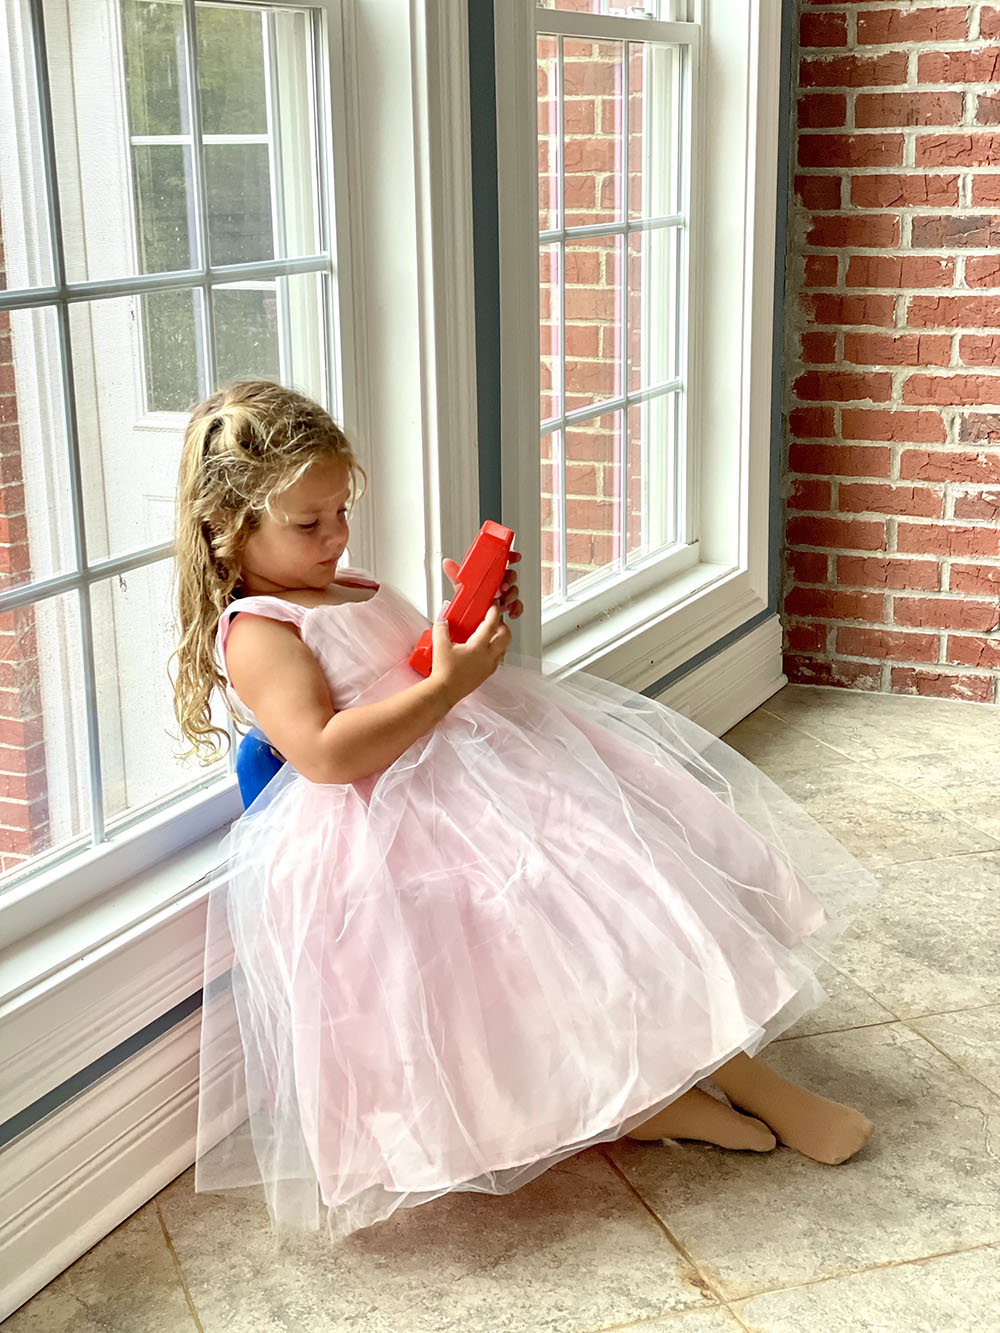 Charlotte as a ballerina